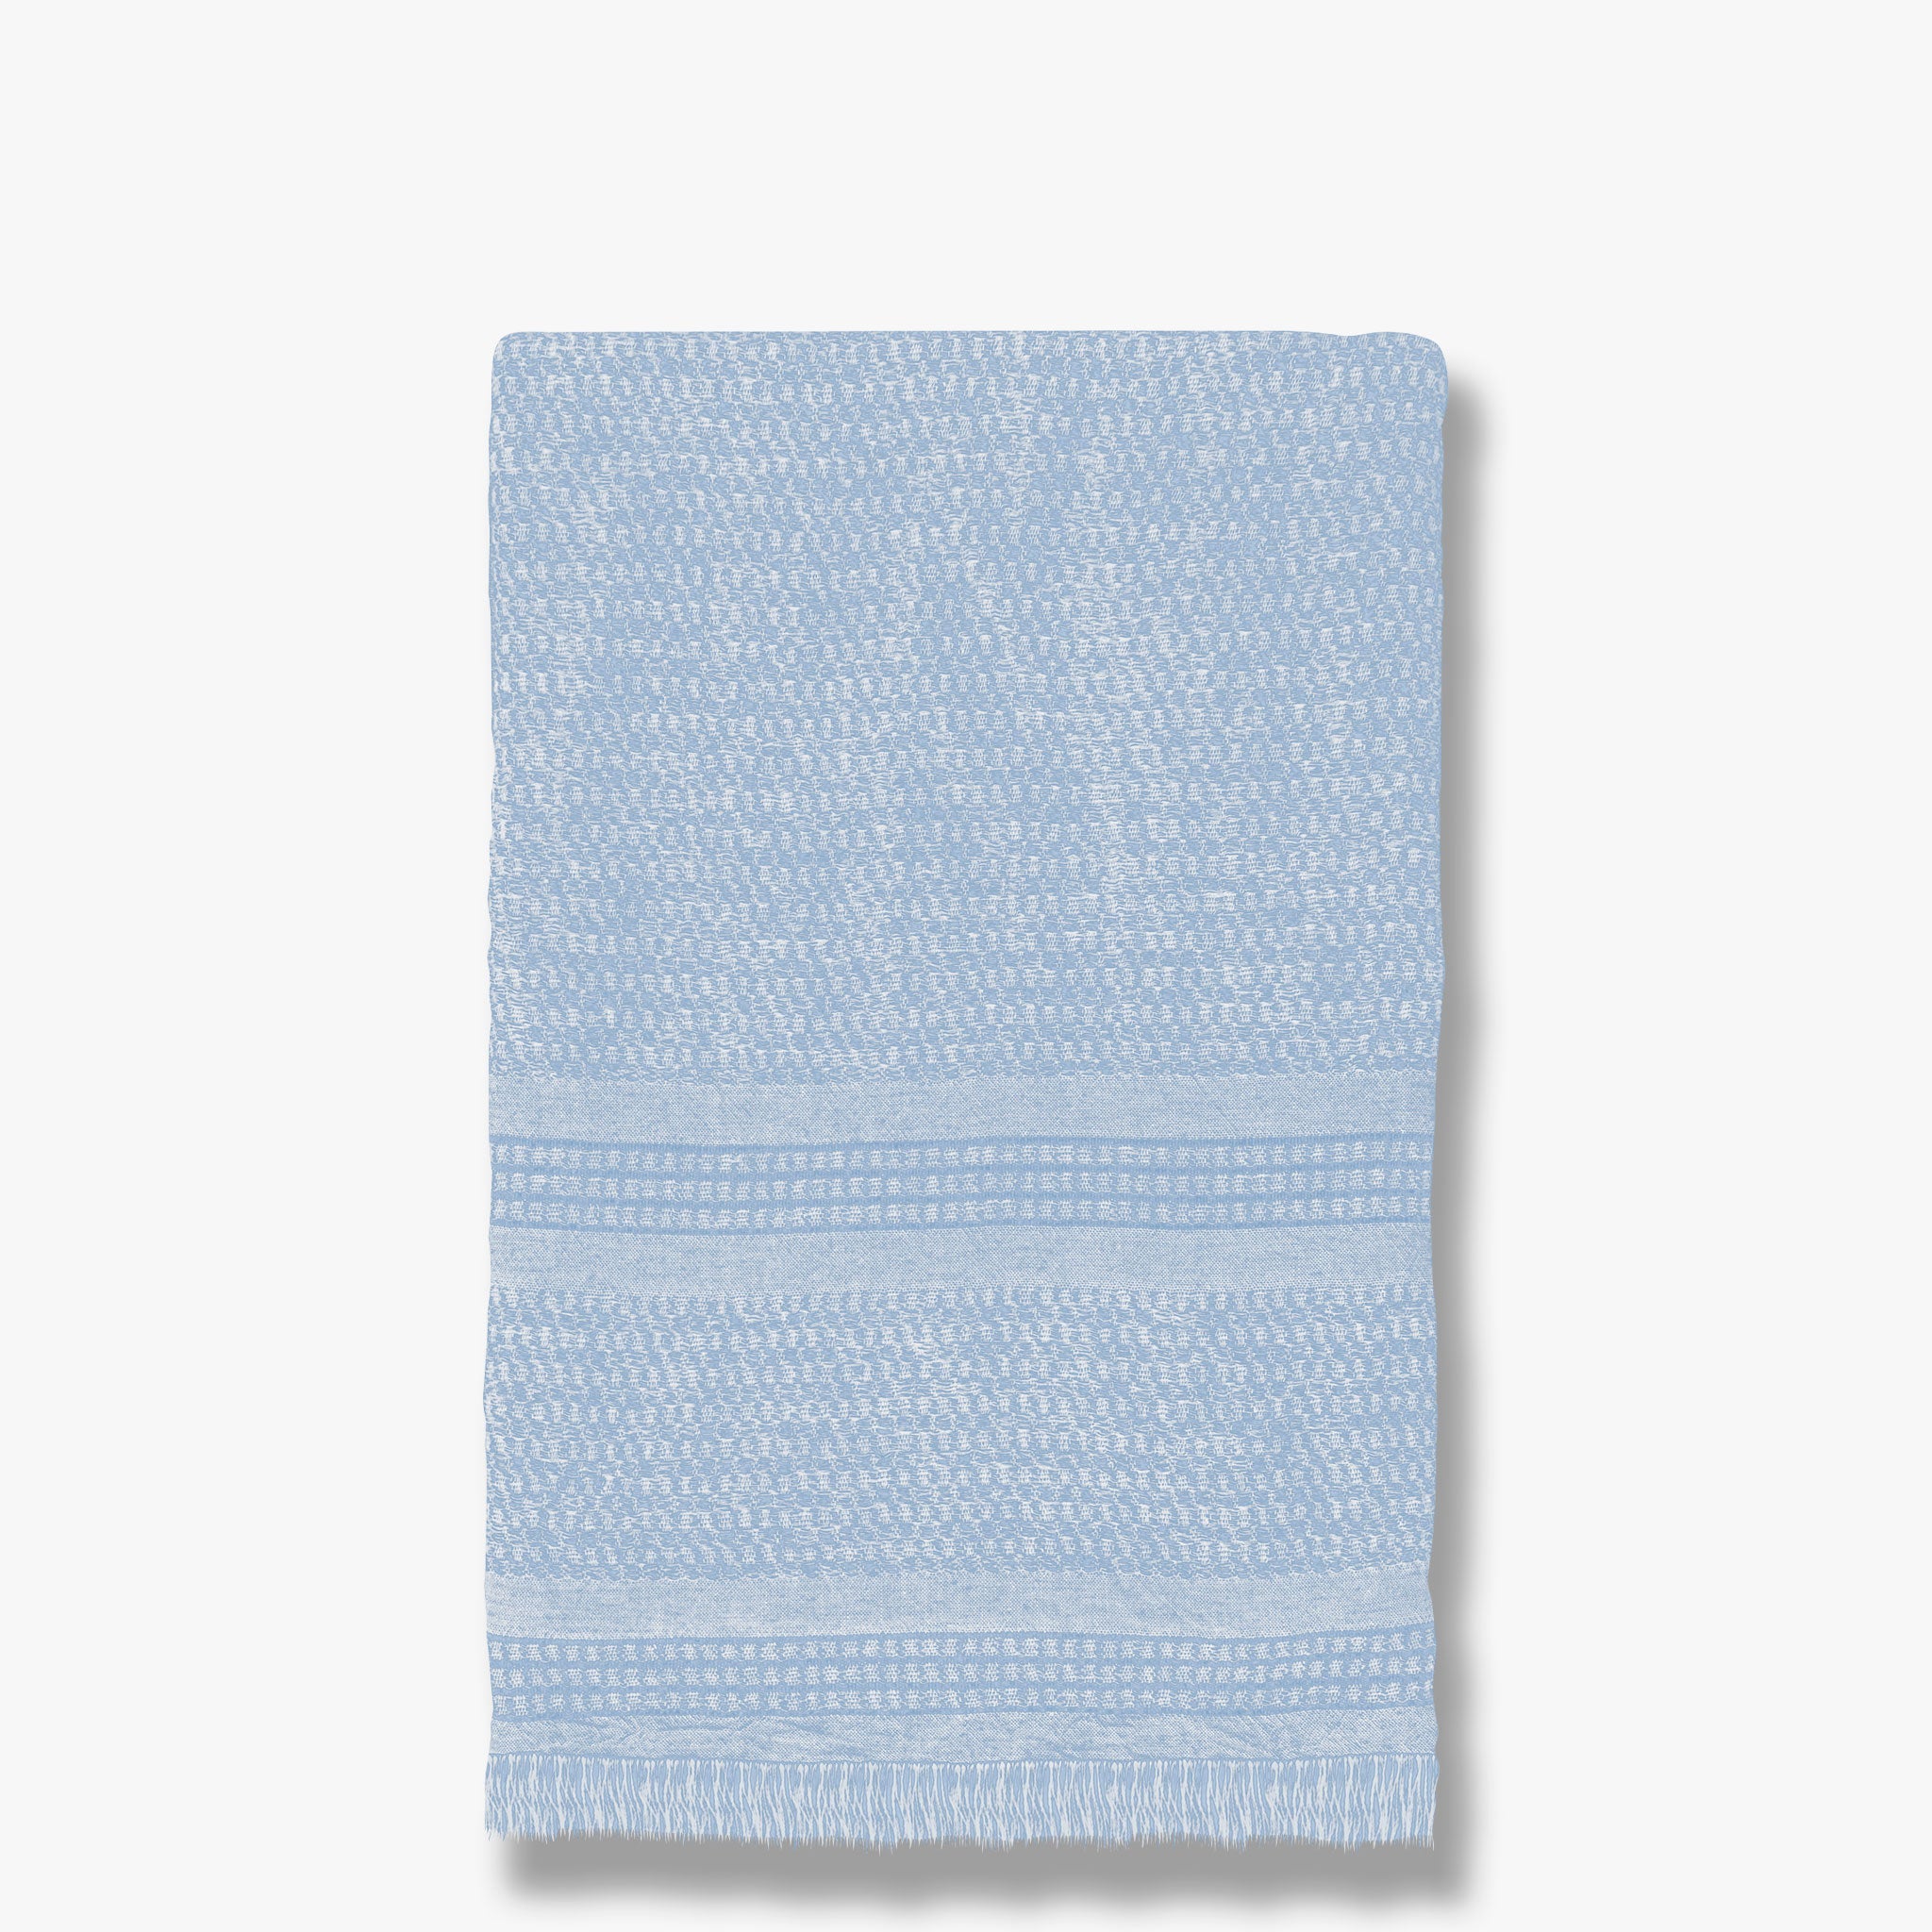 BODUM Towel, Light - International blue Mette Ditmer –